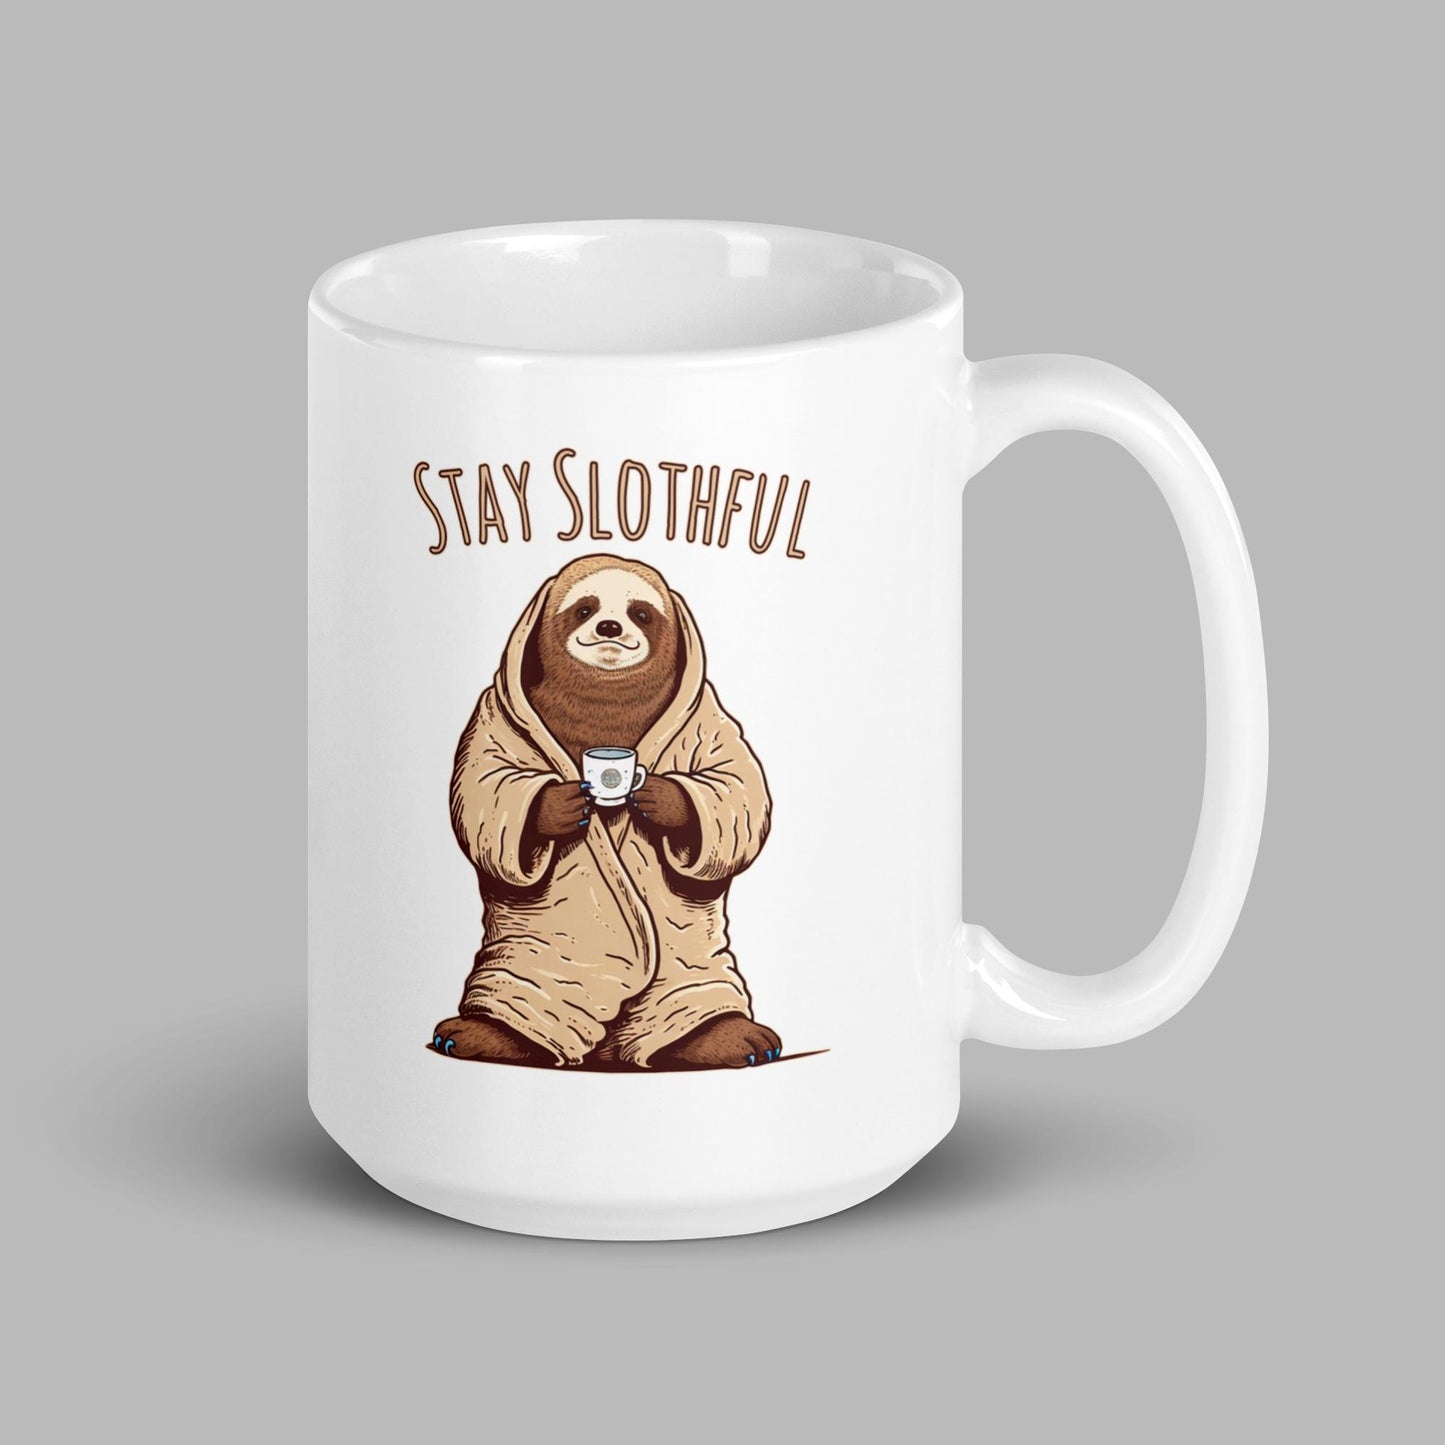 Stay Slothful White glossy mug